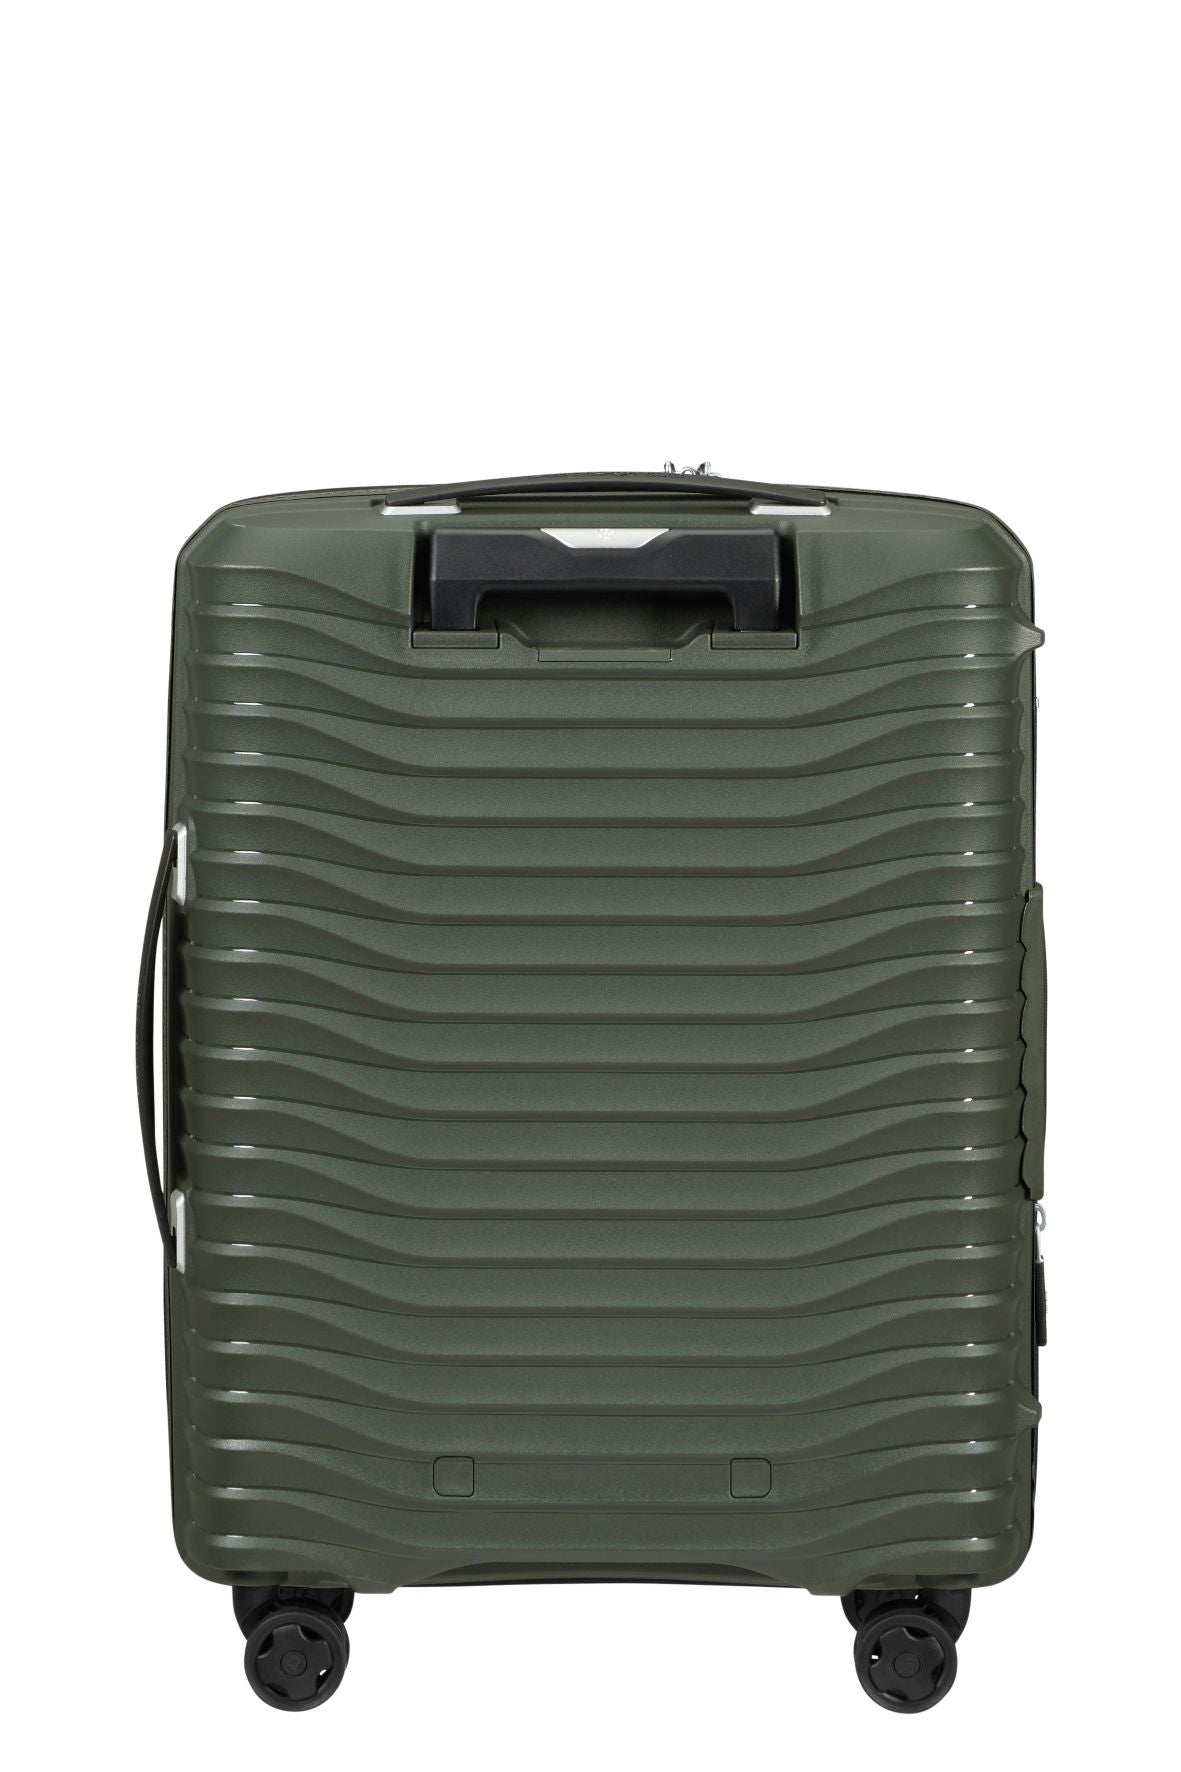 Samsonite - Upscape 55cm Small Suitcase - Climbing Ivy-5